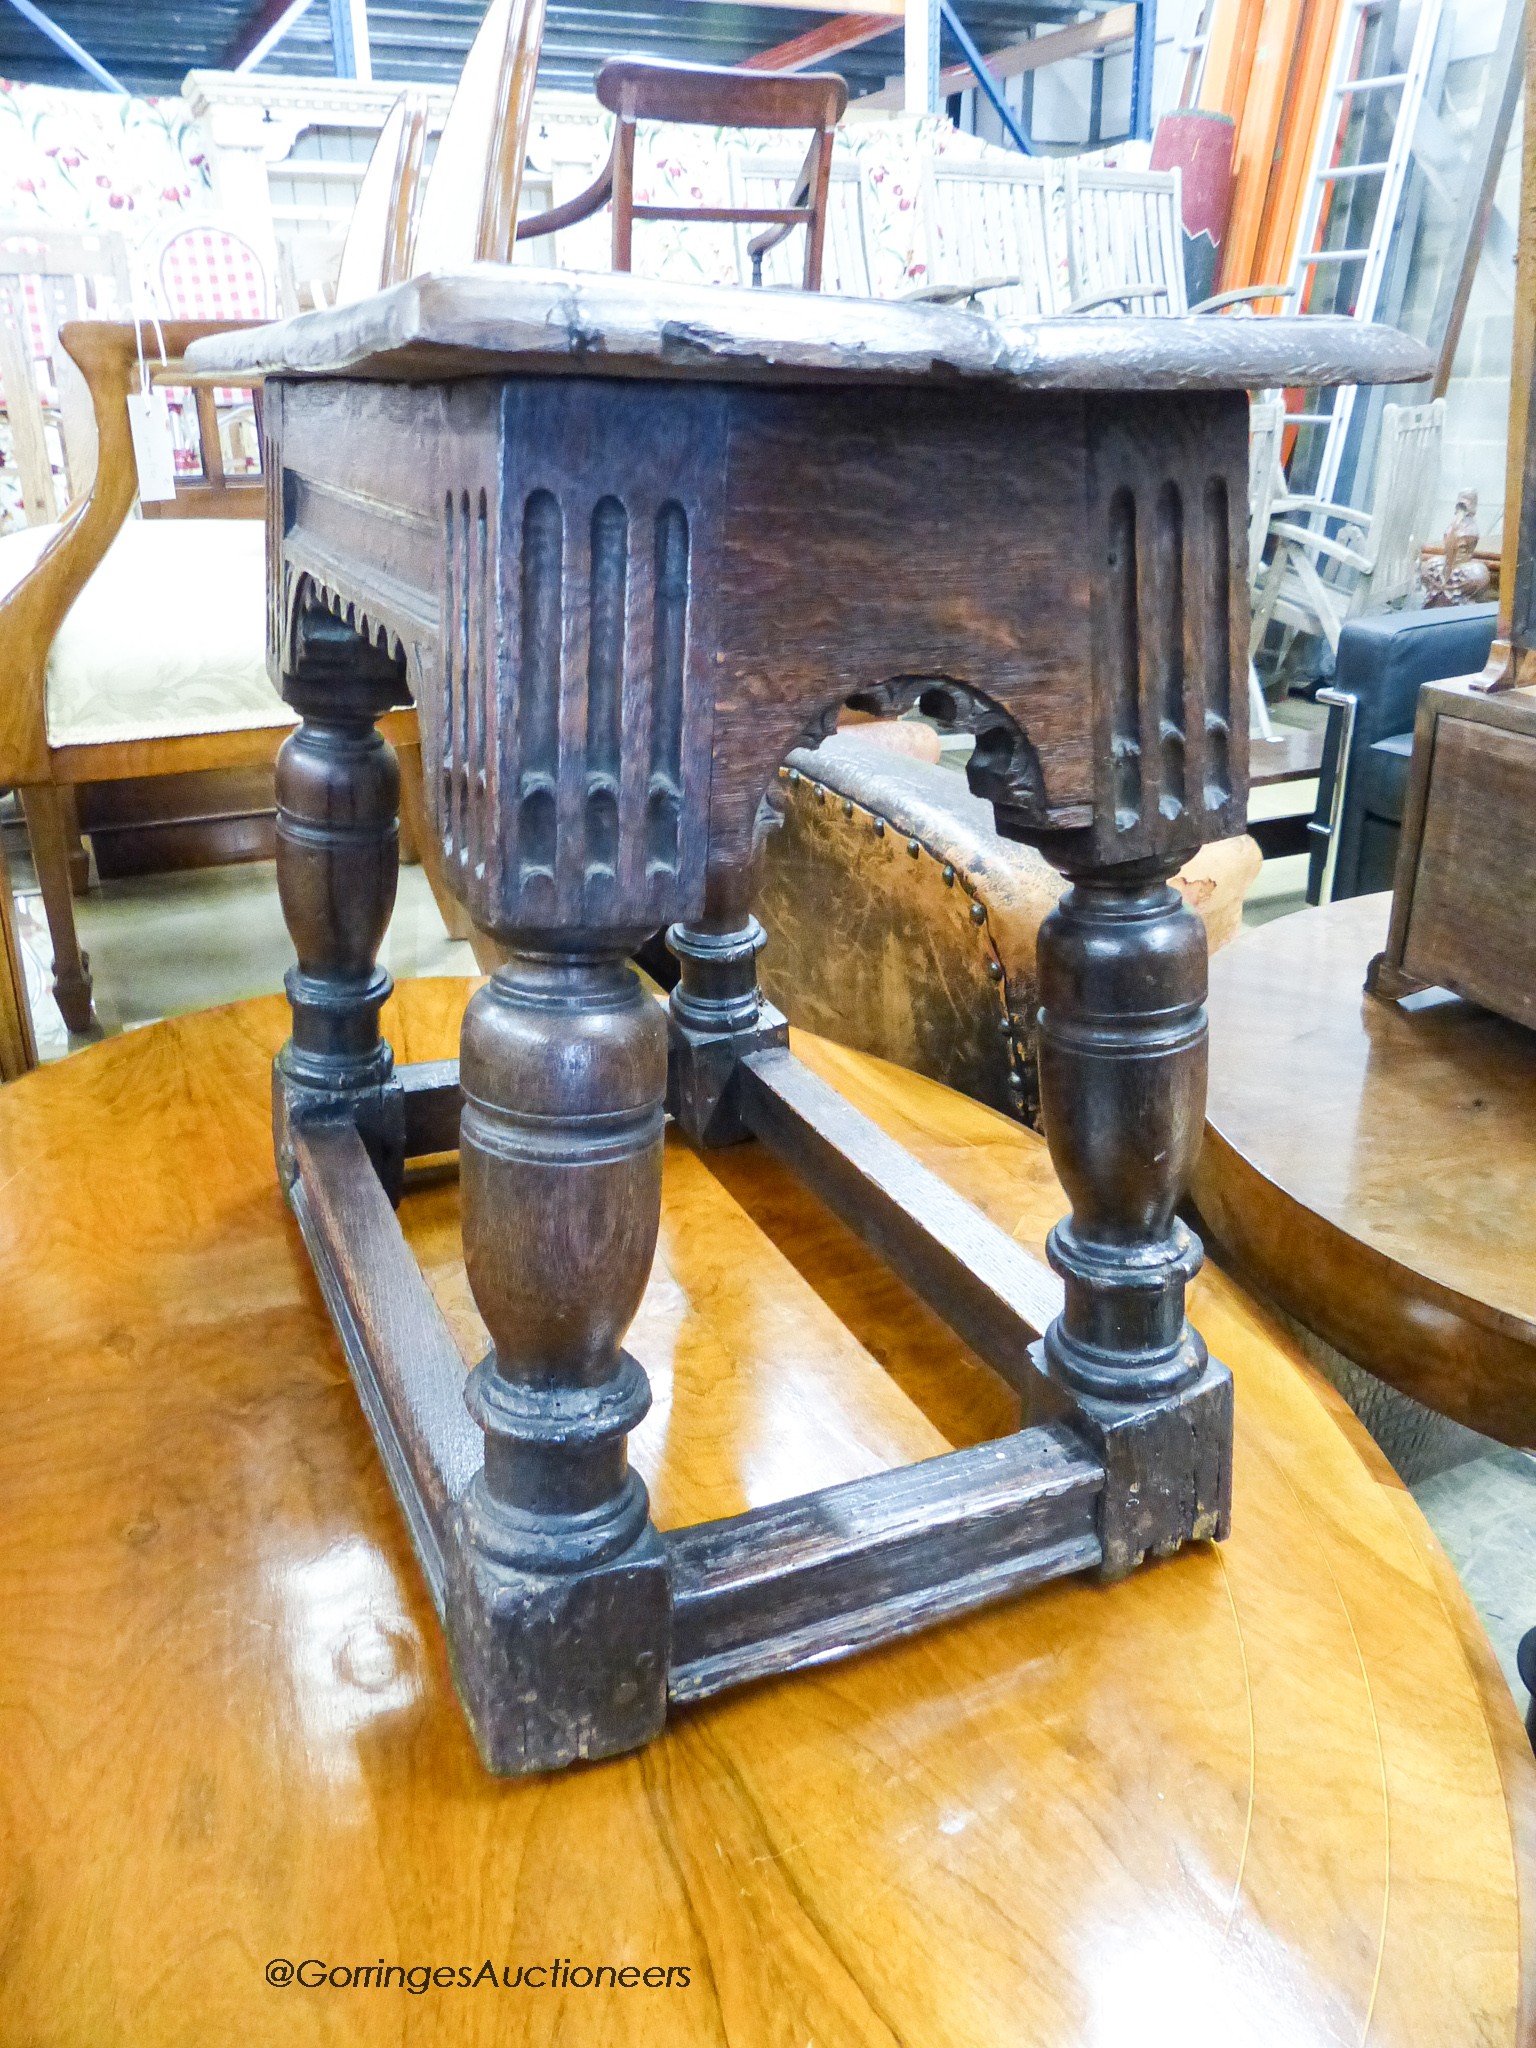 A 17th century style oak joint stool, width 55cm, depth 33cm, height 50cm